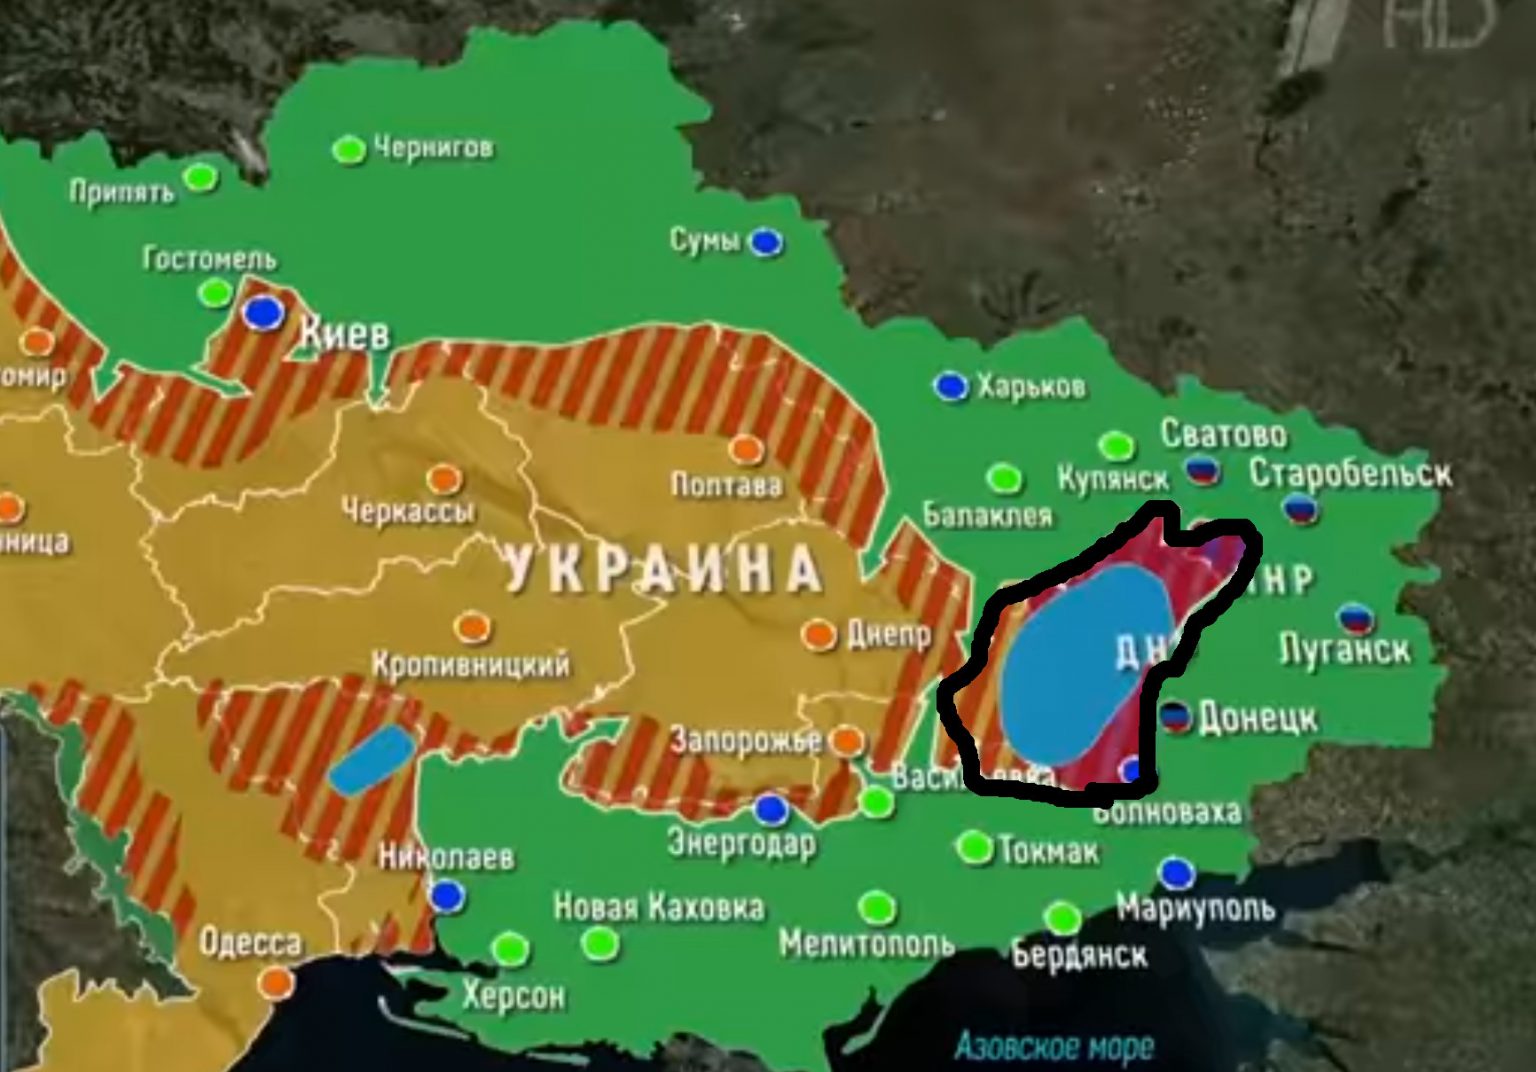 Donbass-operational-cauldron-on-Russian-TV-1536x1072.jpg